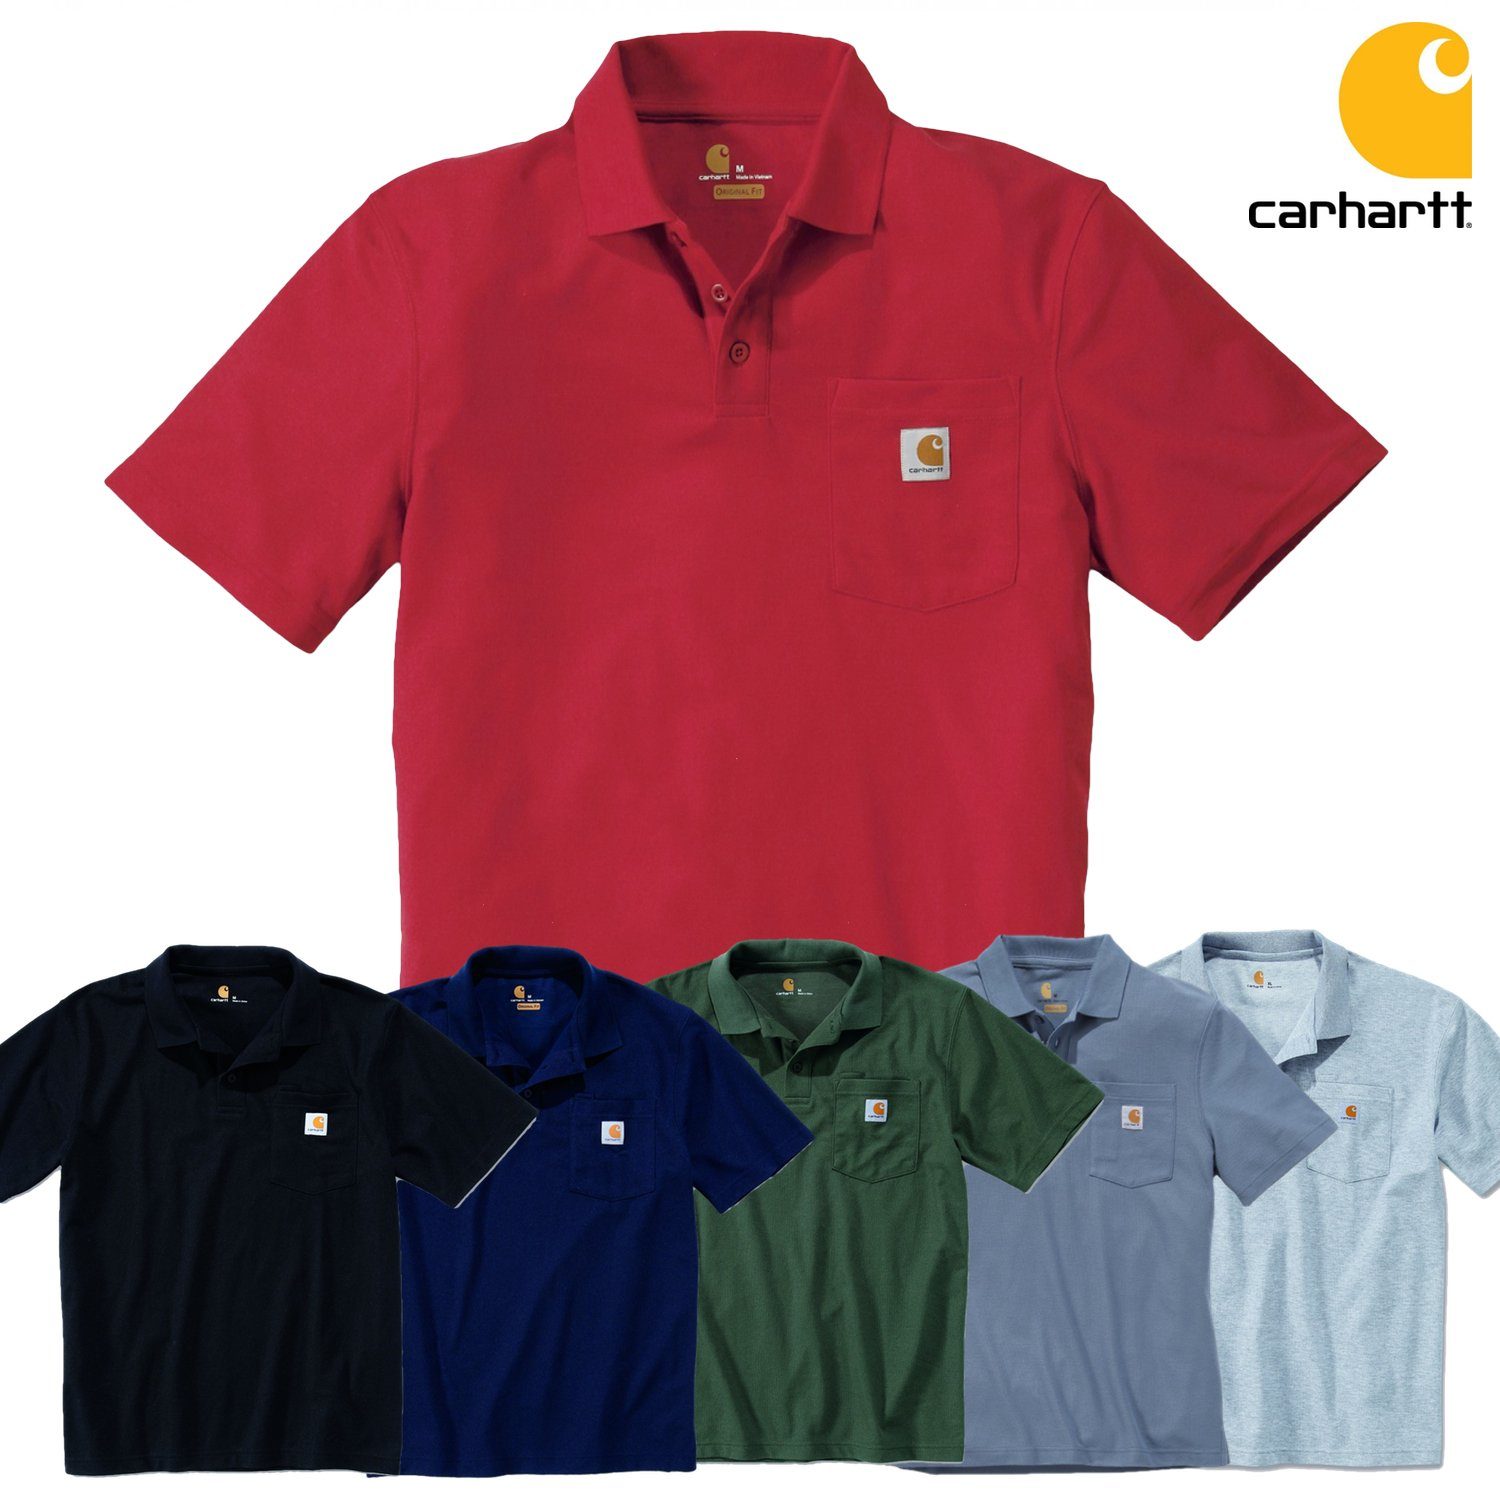 Carhartt Poloshirt Carhartt Contractor's Work grey Pocket K570 heather Adult Poloshirt